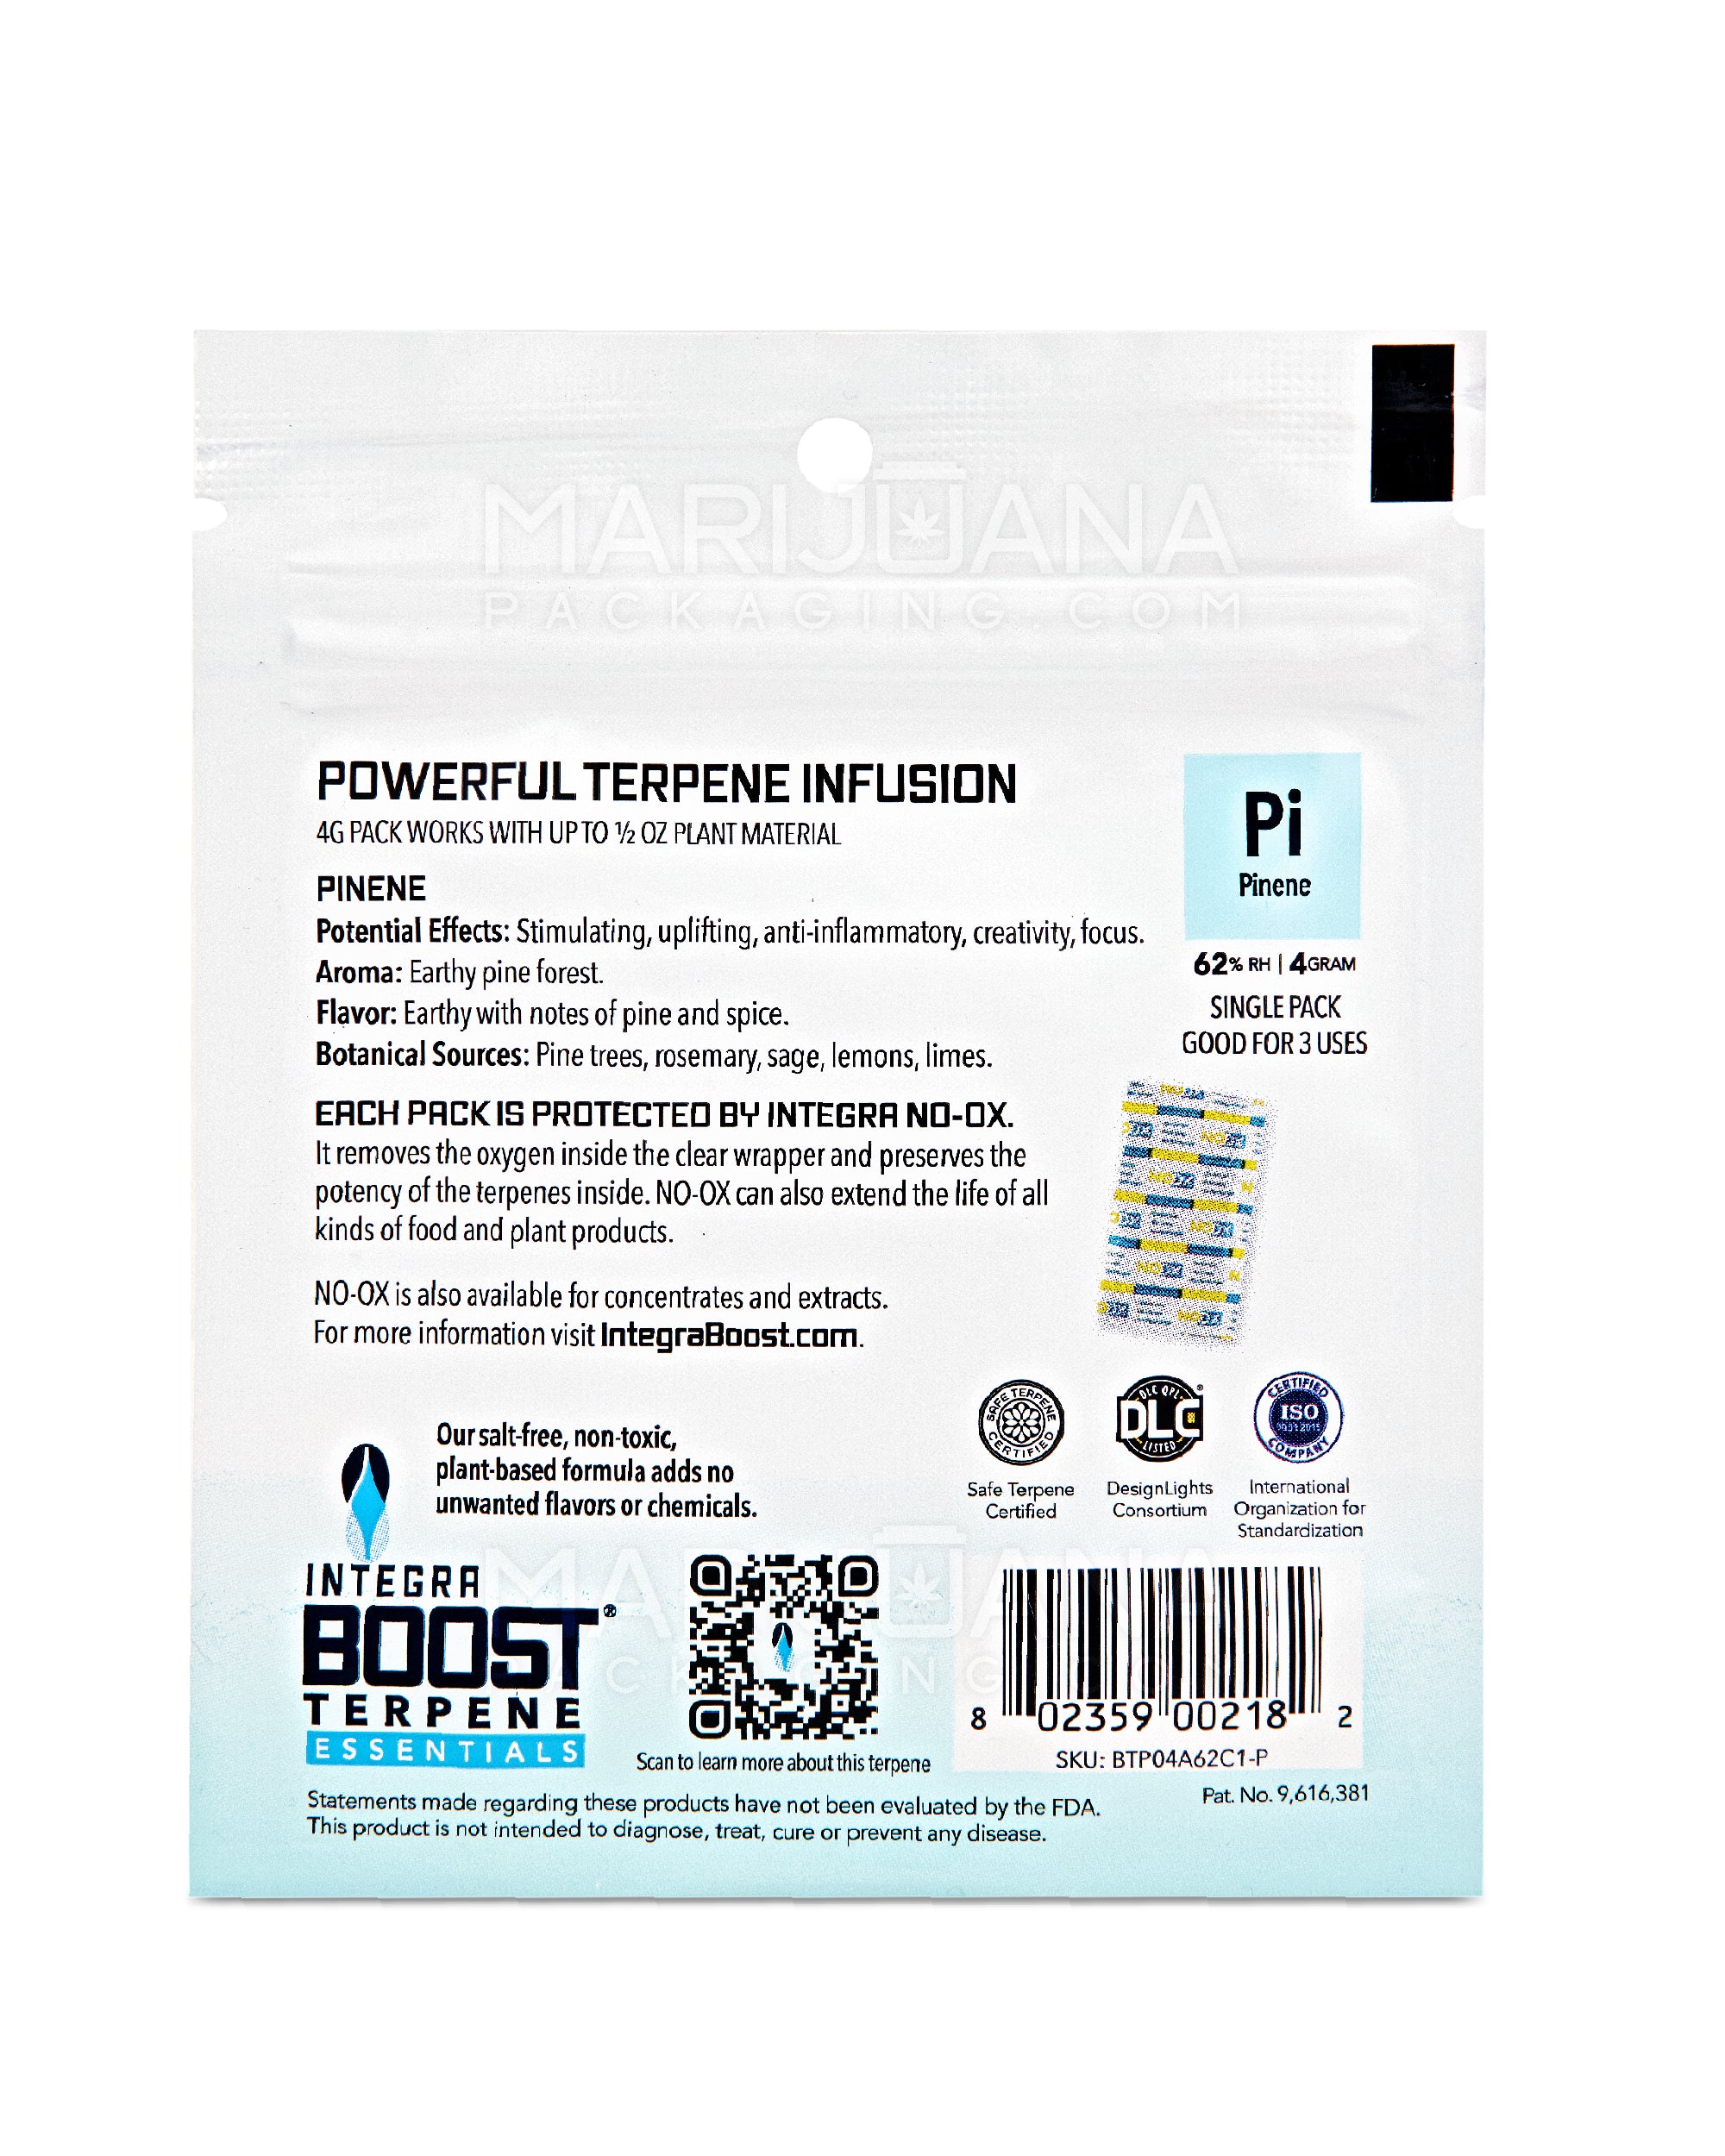 INTEGRA | 'Retail Display' Boost Terpene Essentials Pinene Humidity Pack | 4 Grams - 62% - 48 Count - 3